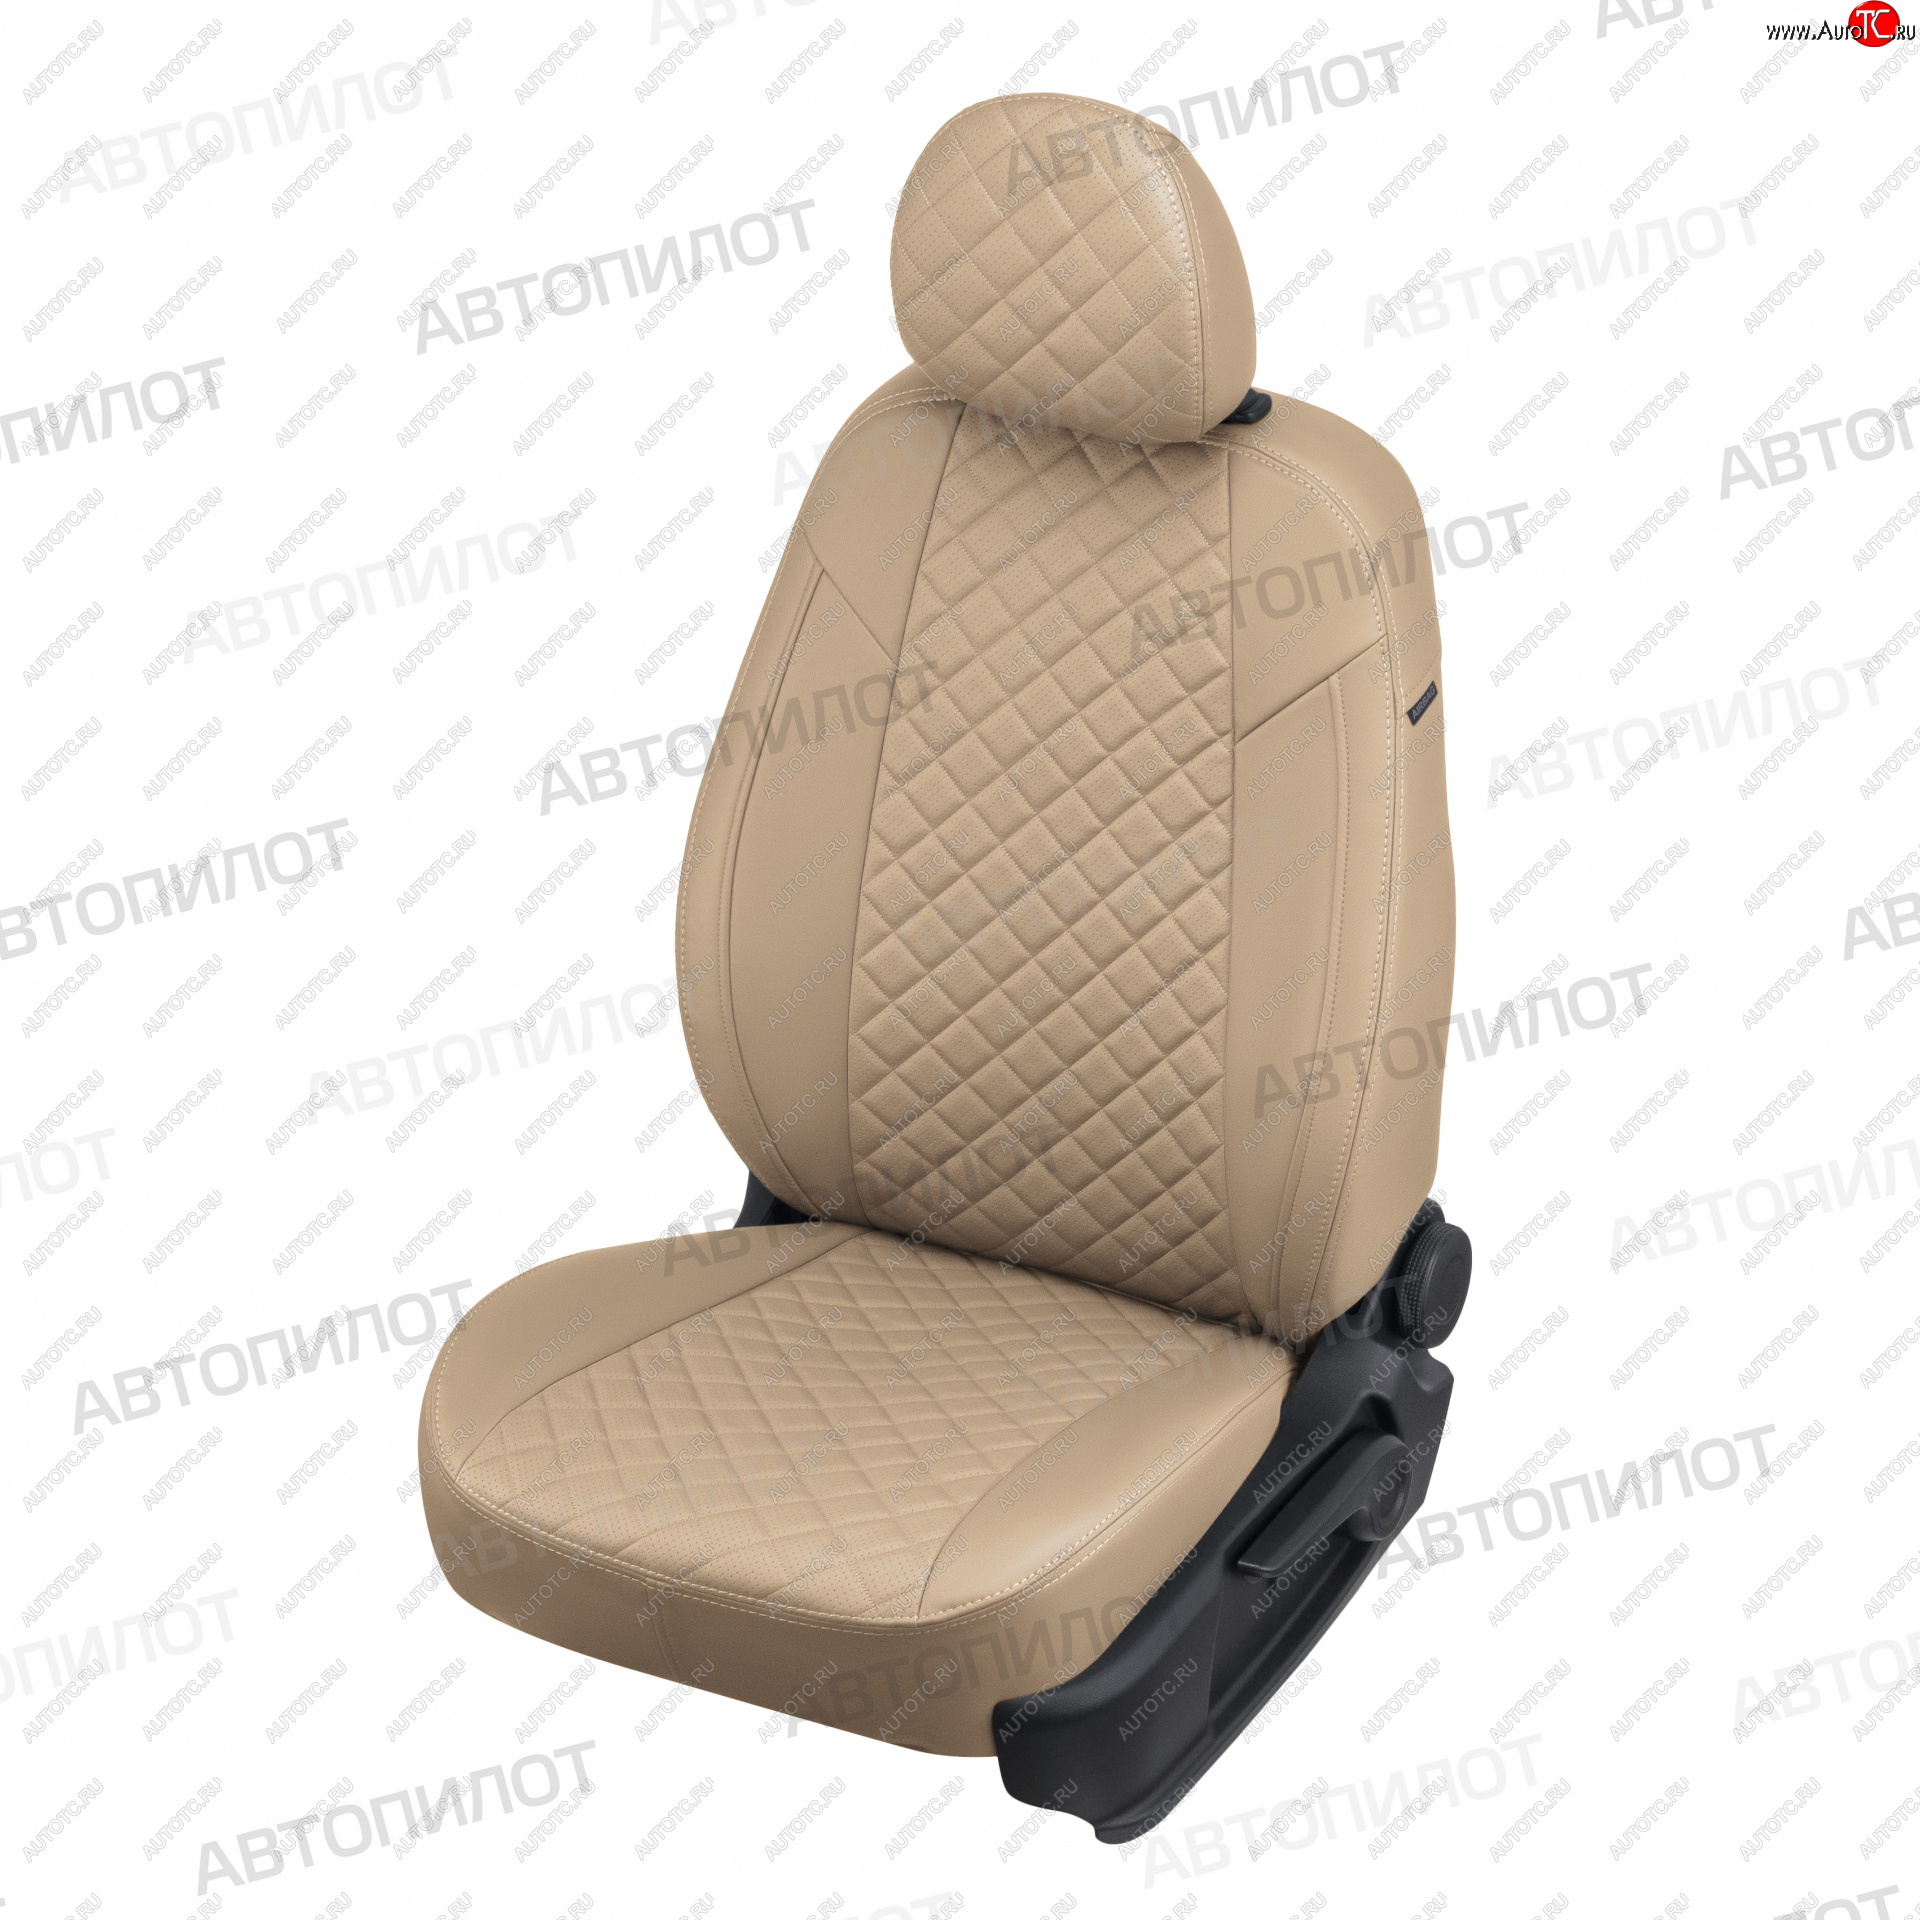 21 599 р. Чехлы сидений (9 мест, экокожа) Автопилот Ромб  Ford Transit  4 (2014-2021) (темно-бежевый)